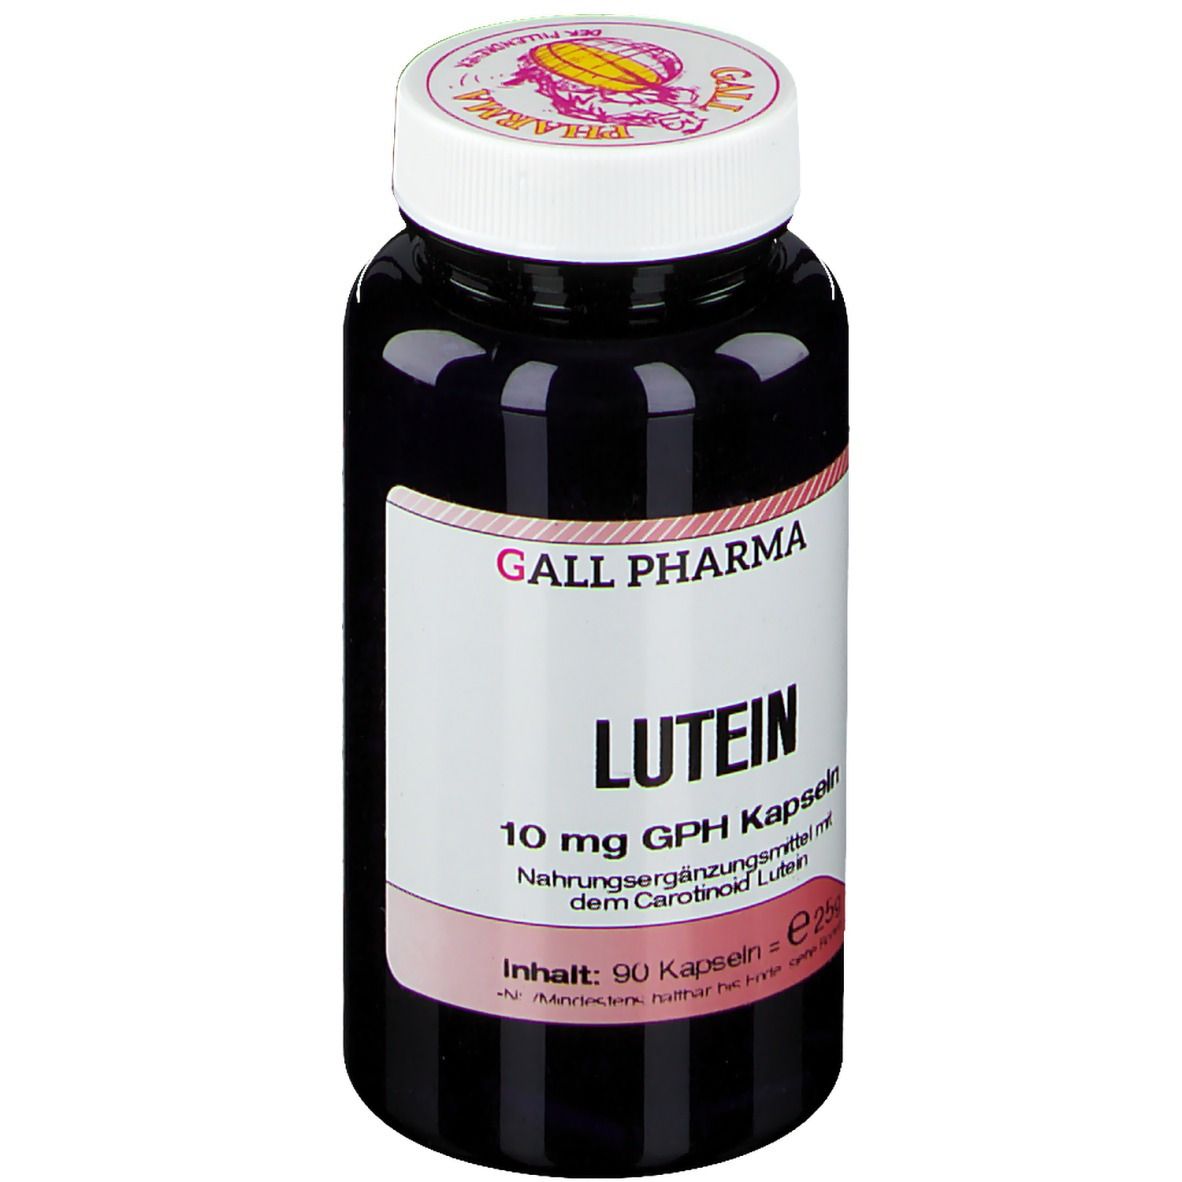 GALL PHARMA LUTEIN 10 mg GPH Kapseln